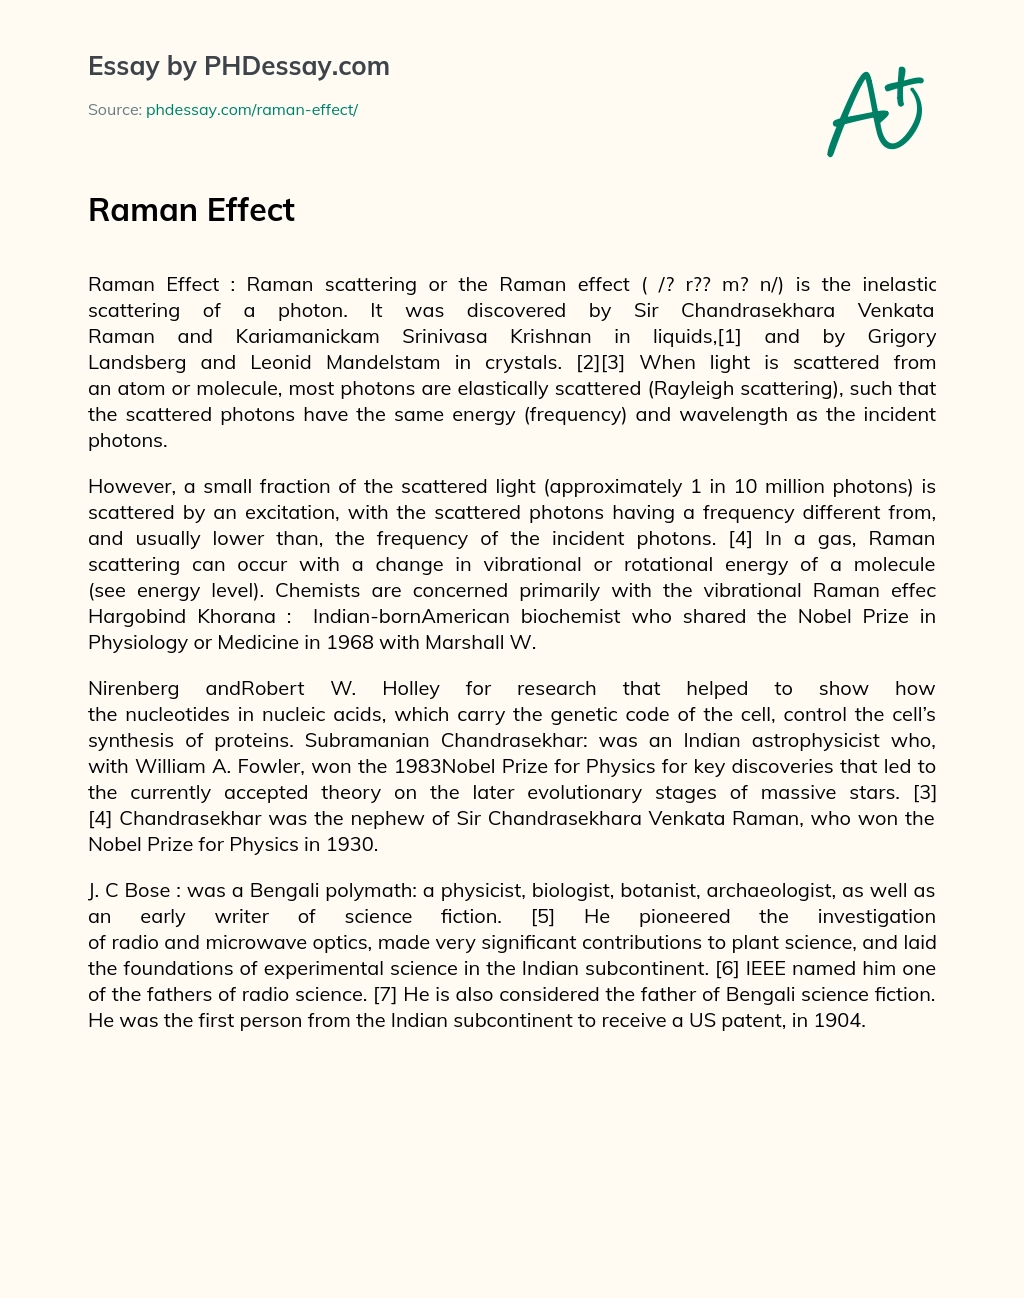 Raman Effect essay